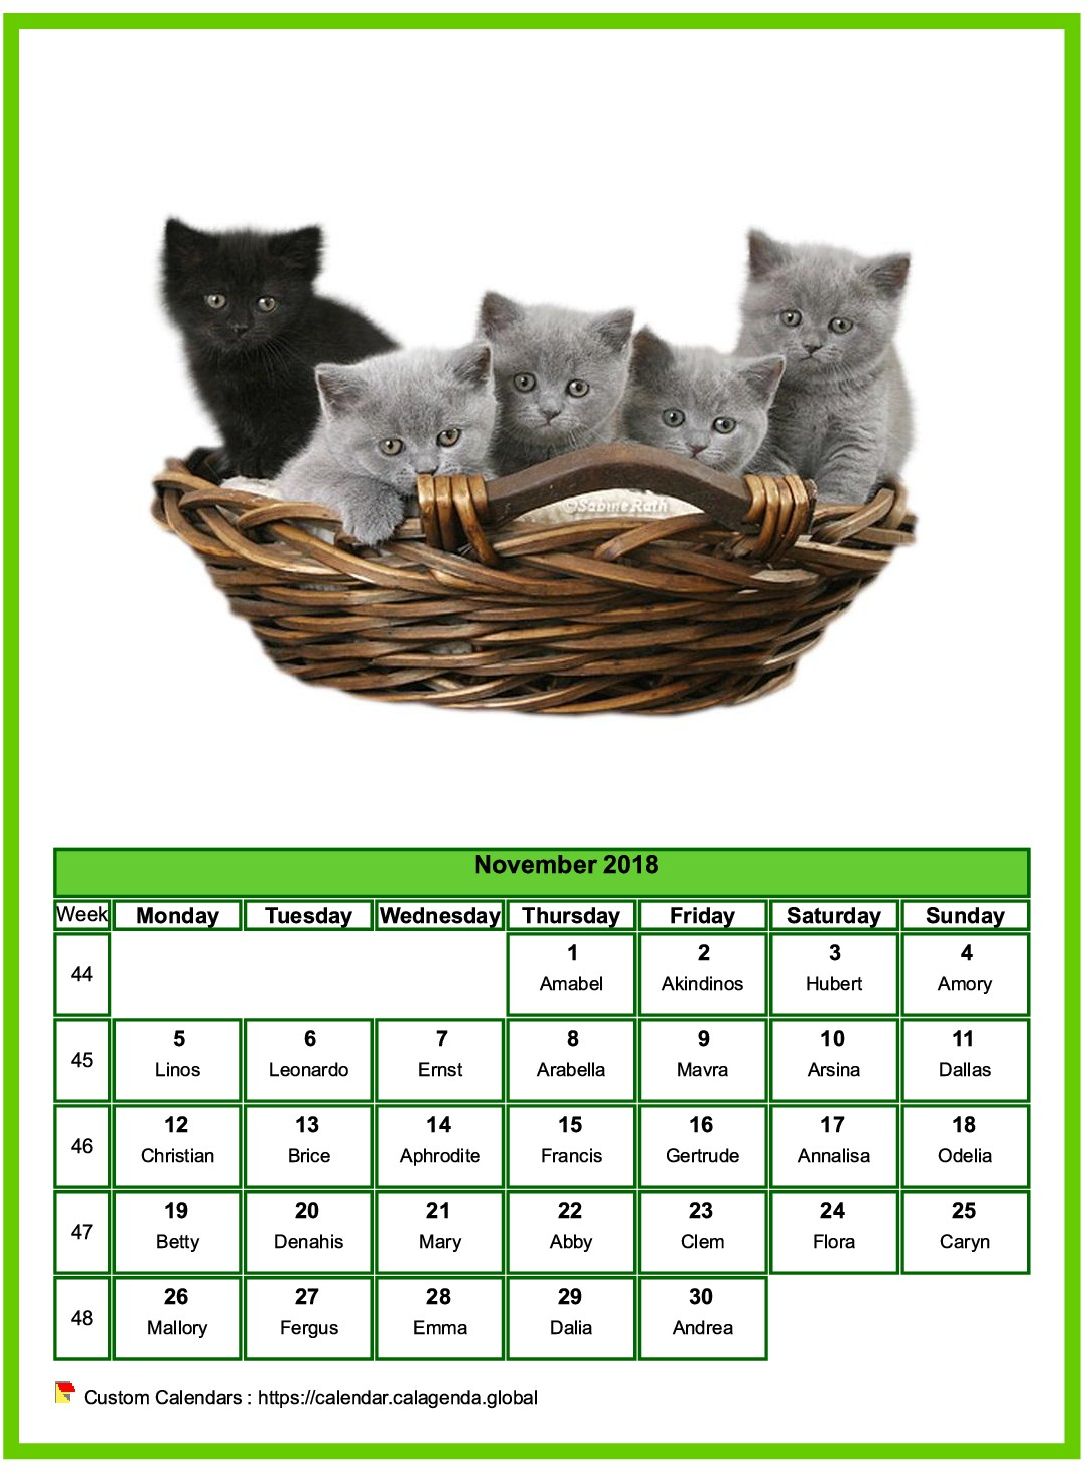 Calendar November 2018 cats